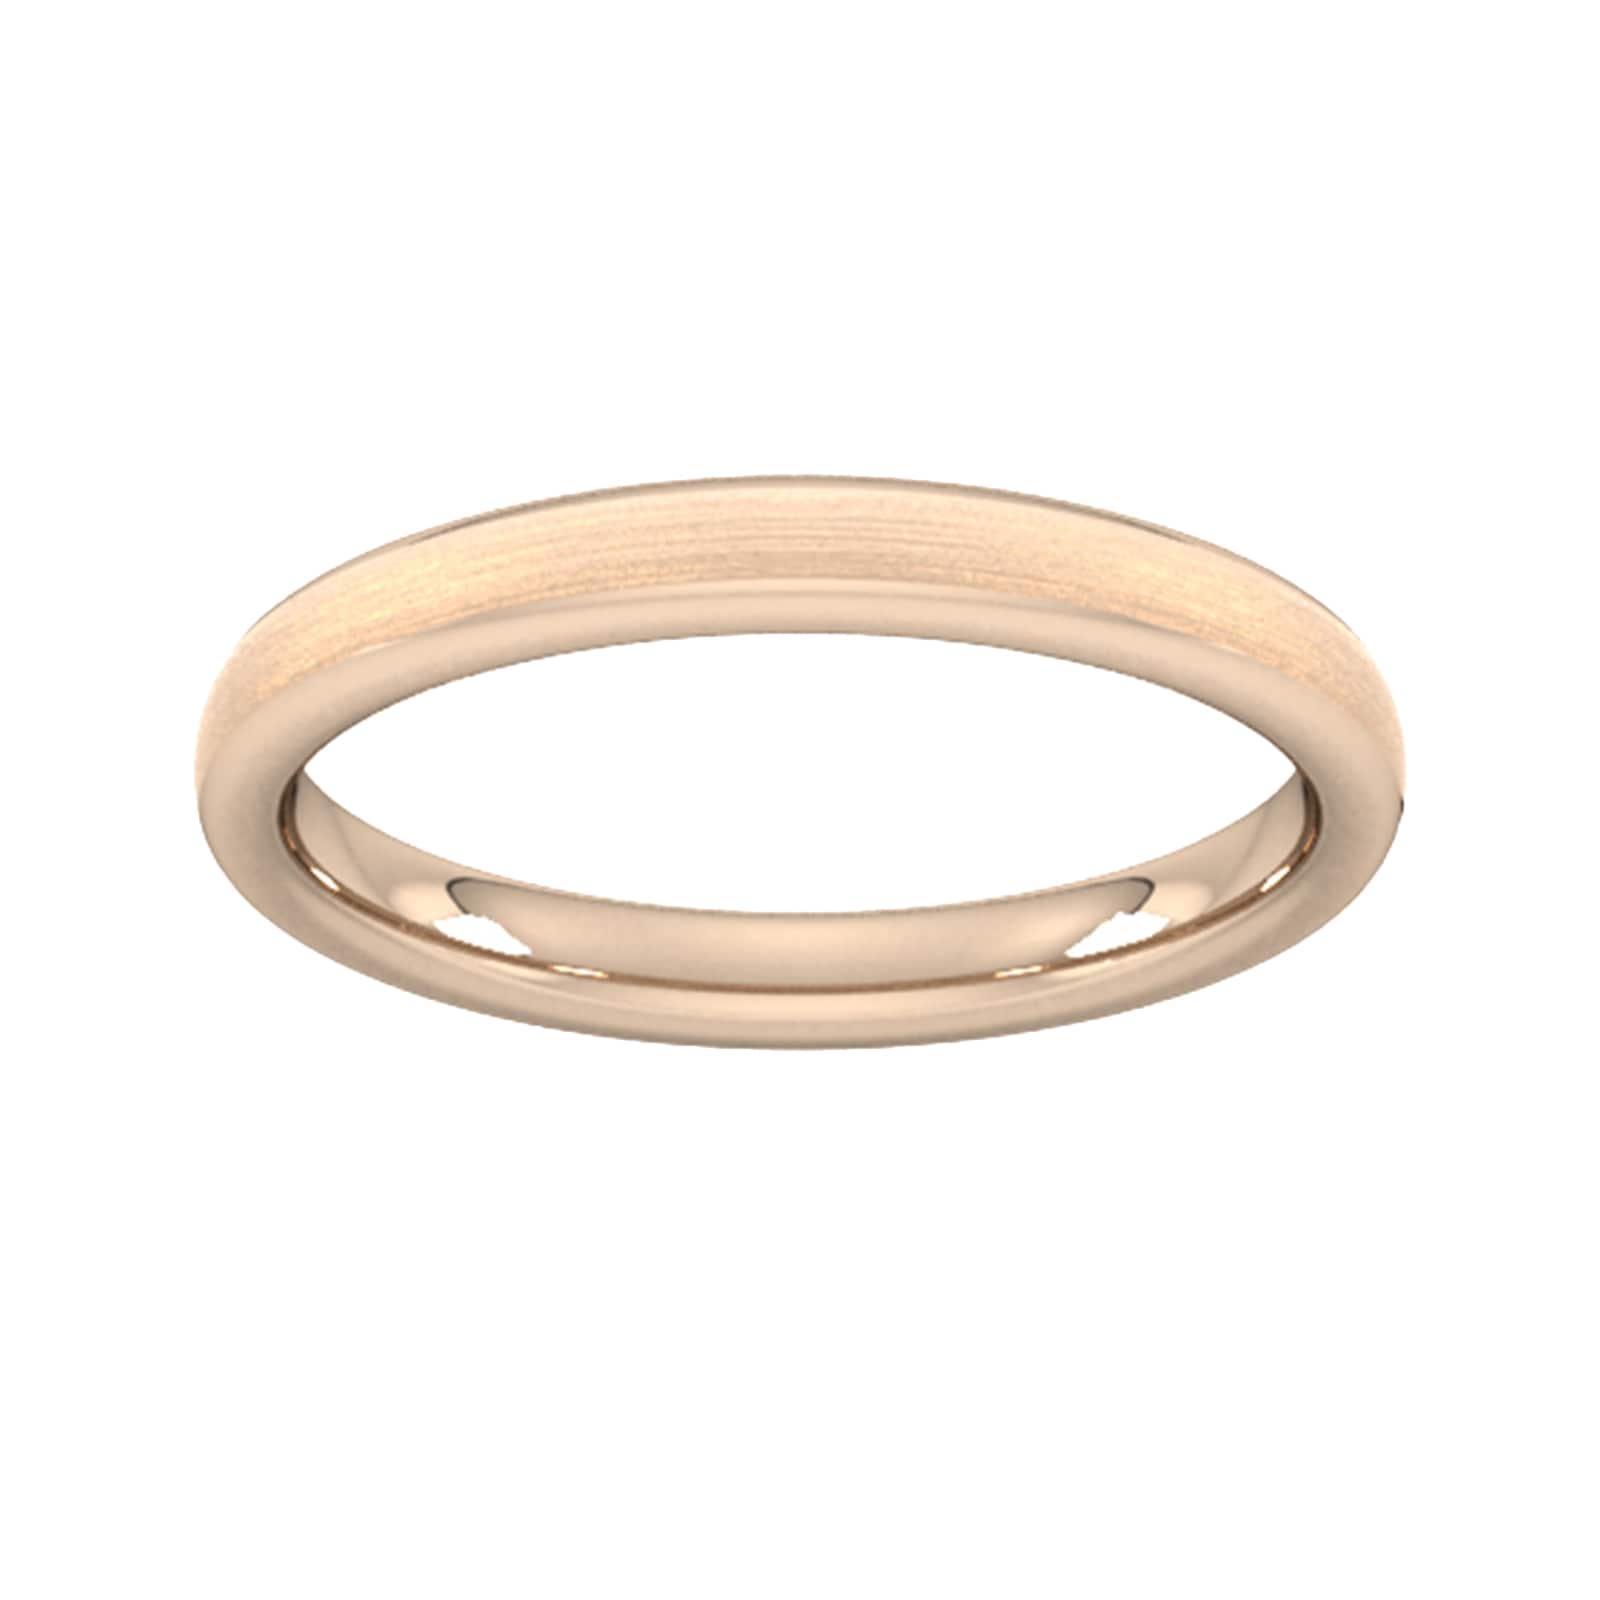 2.5mm Slight Court Heavy Matt Finished Wedding Ring In 9 Carat Rose Gold - Ring Size O